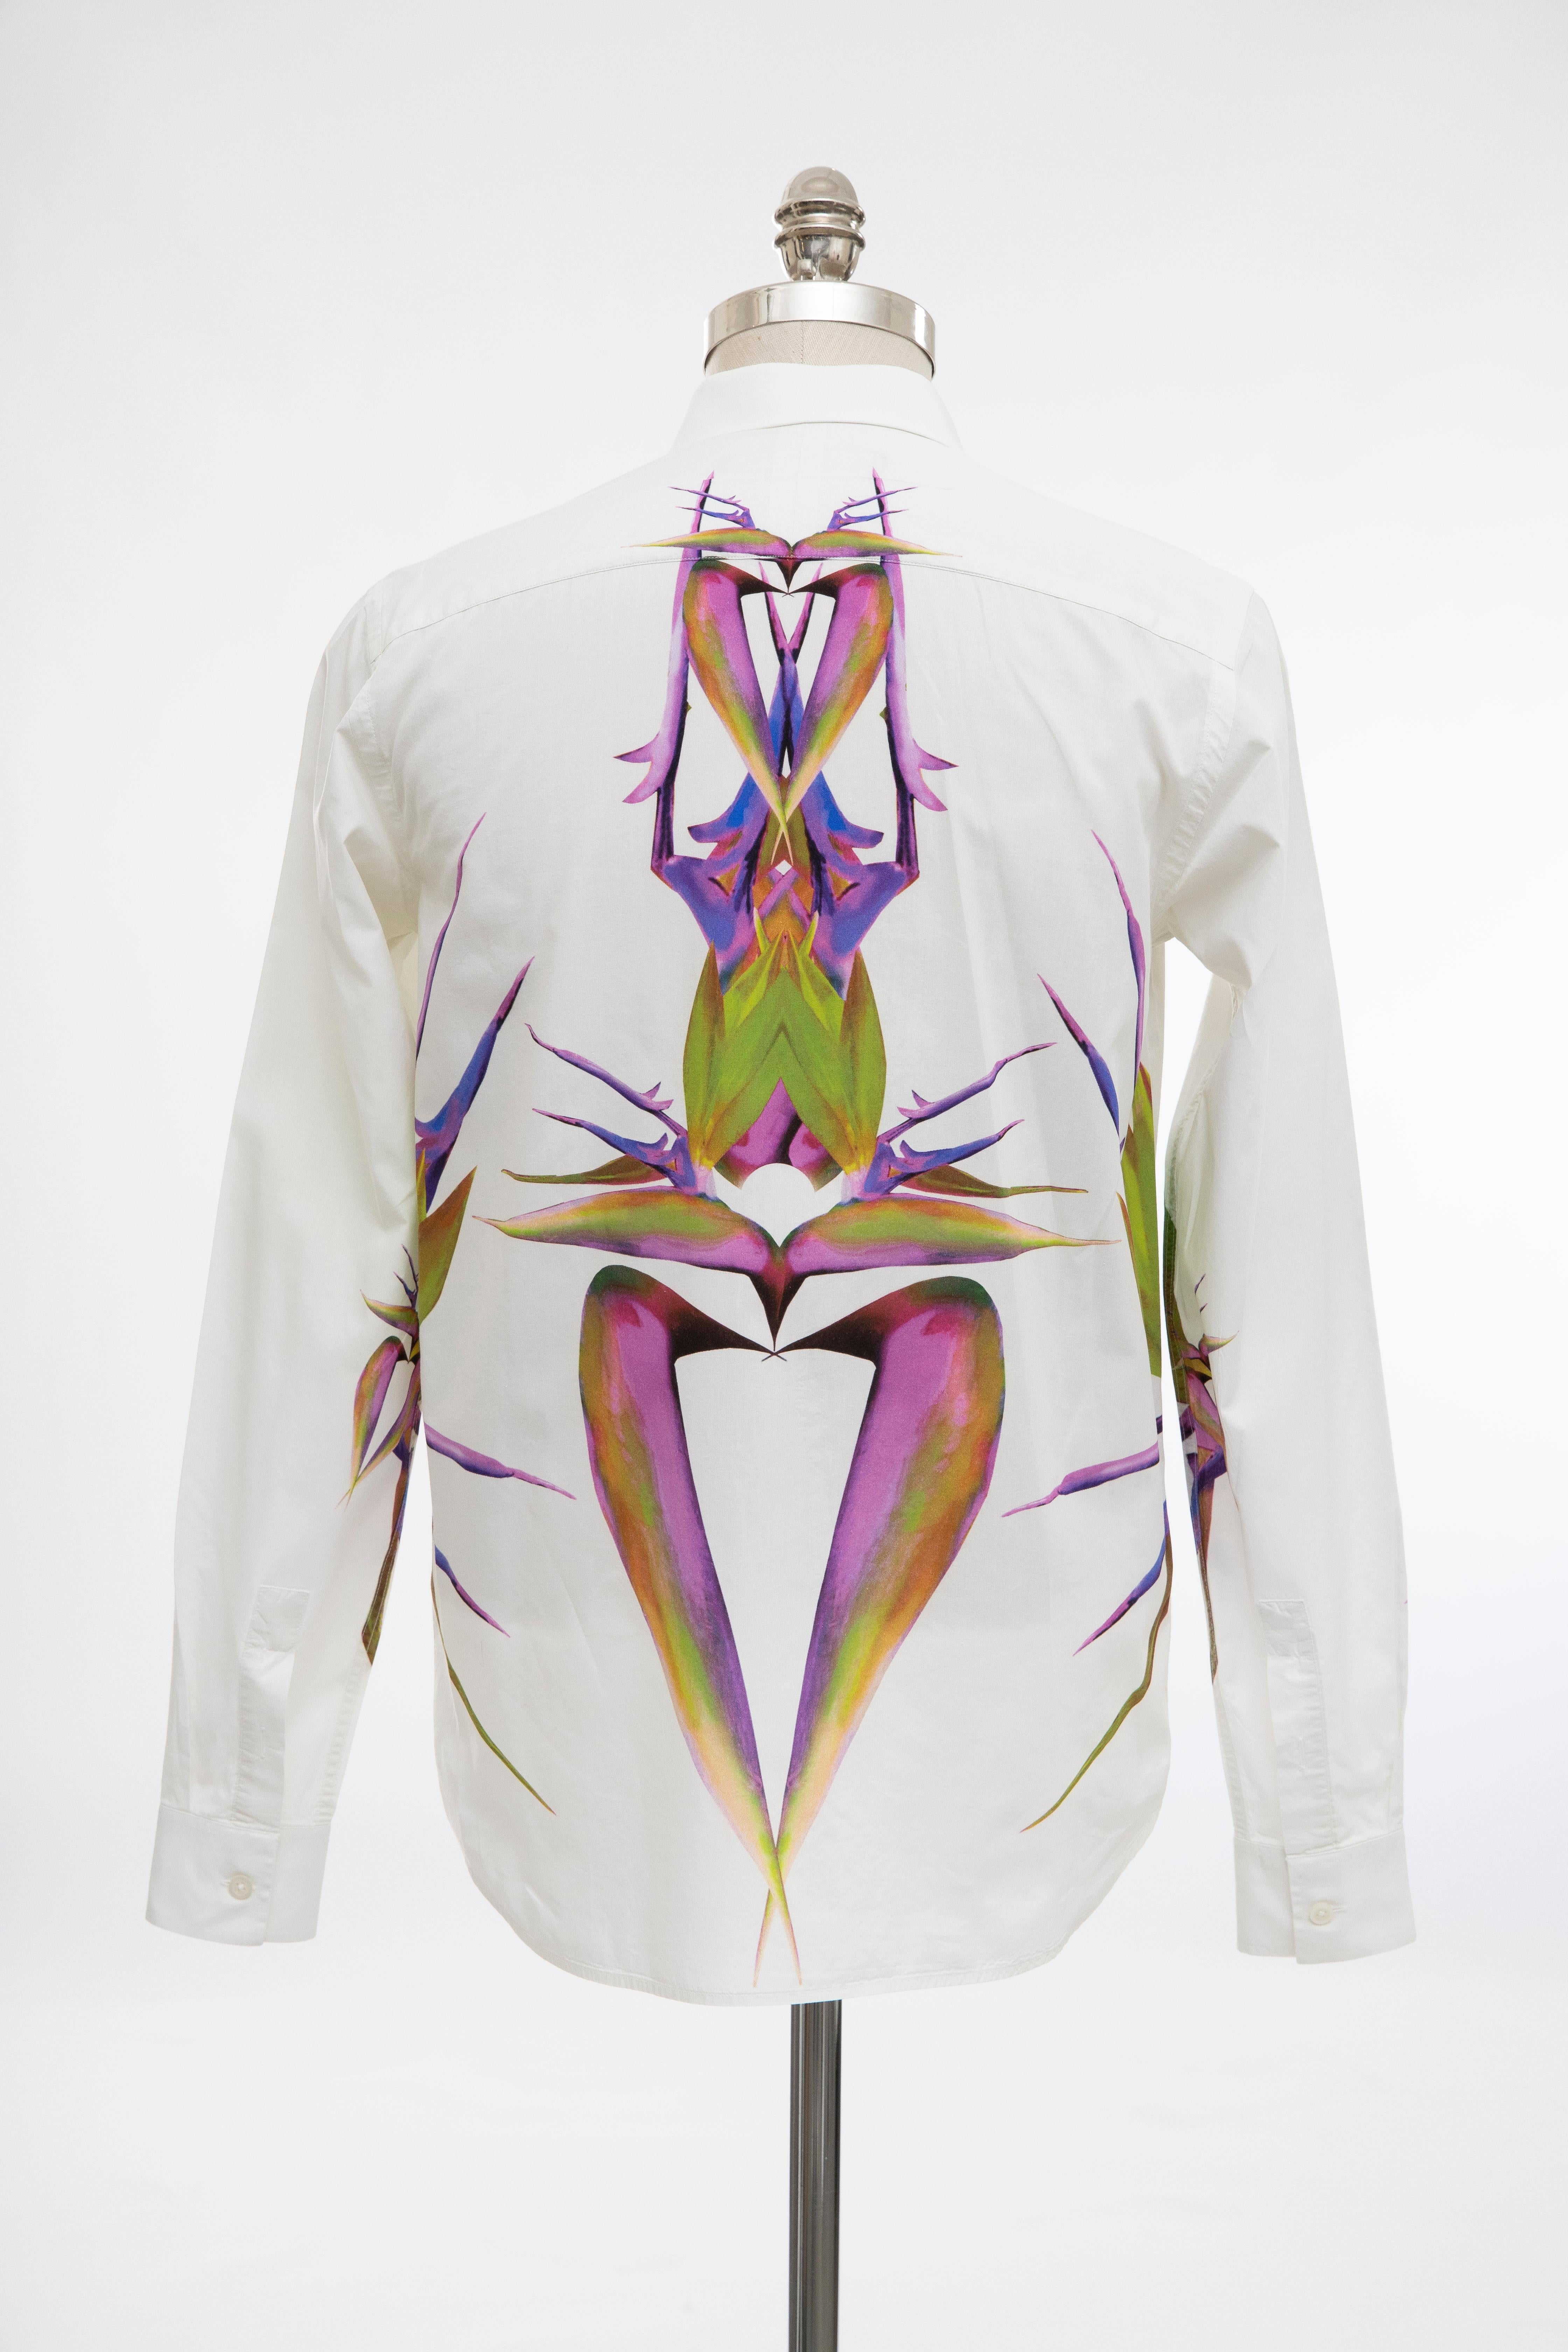 Women's or Men's Riccardo Tisci for Givenchy Men's Cotton Birds of Paradise Shirt, Spring 2012